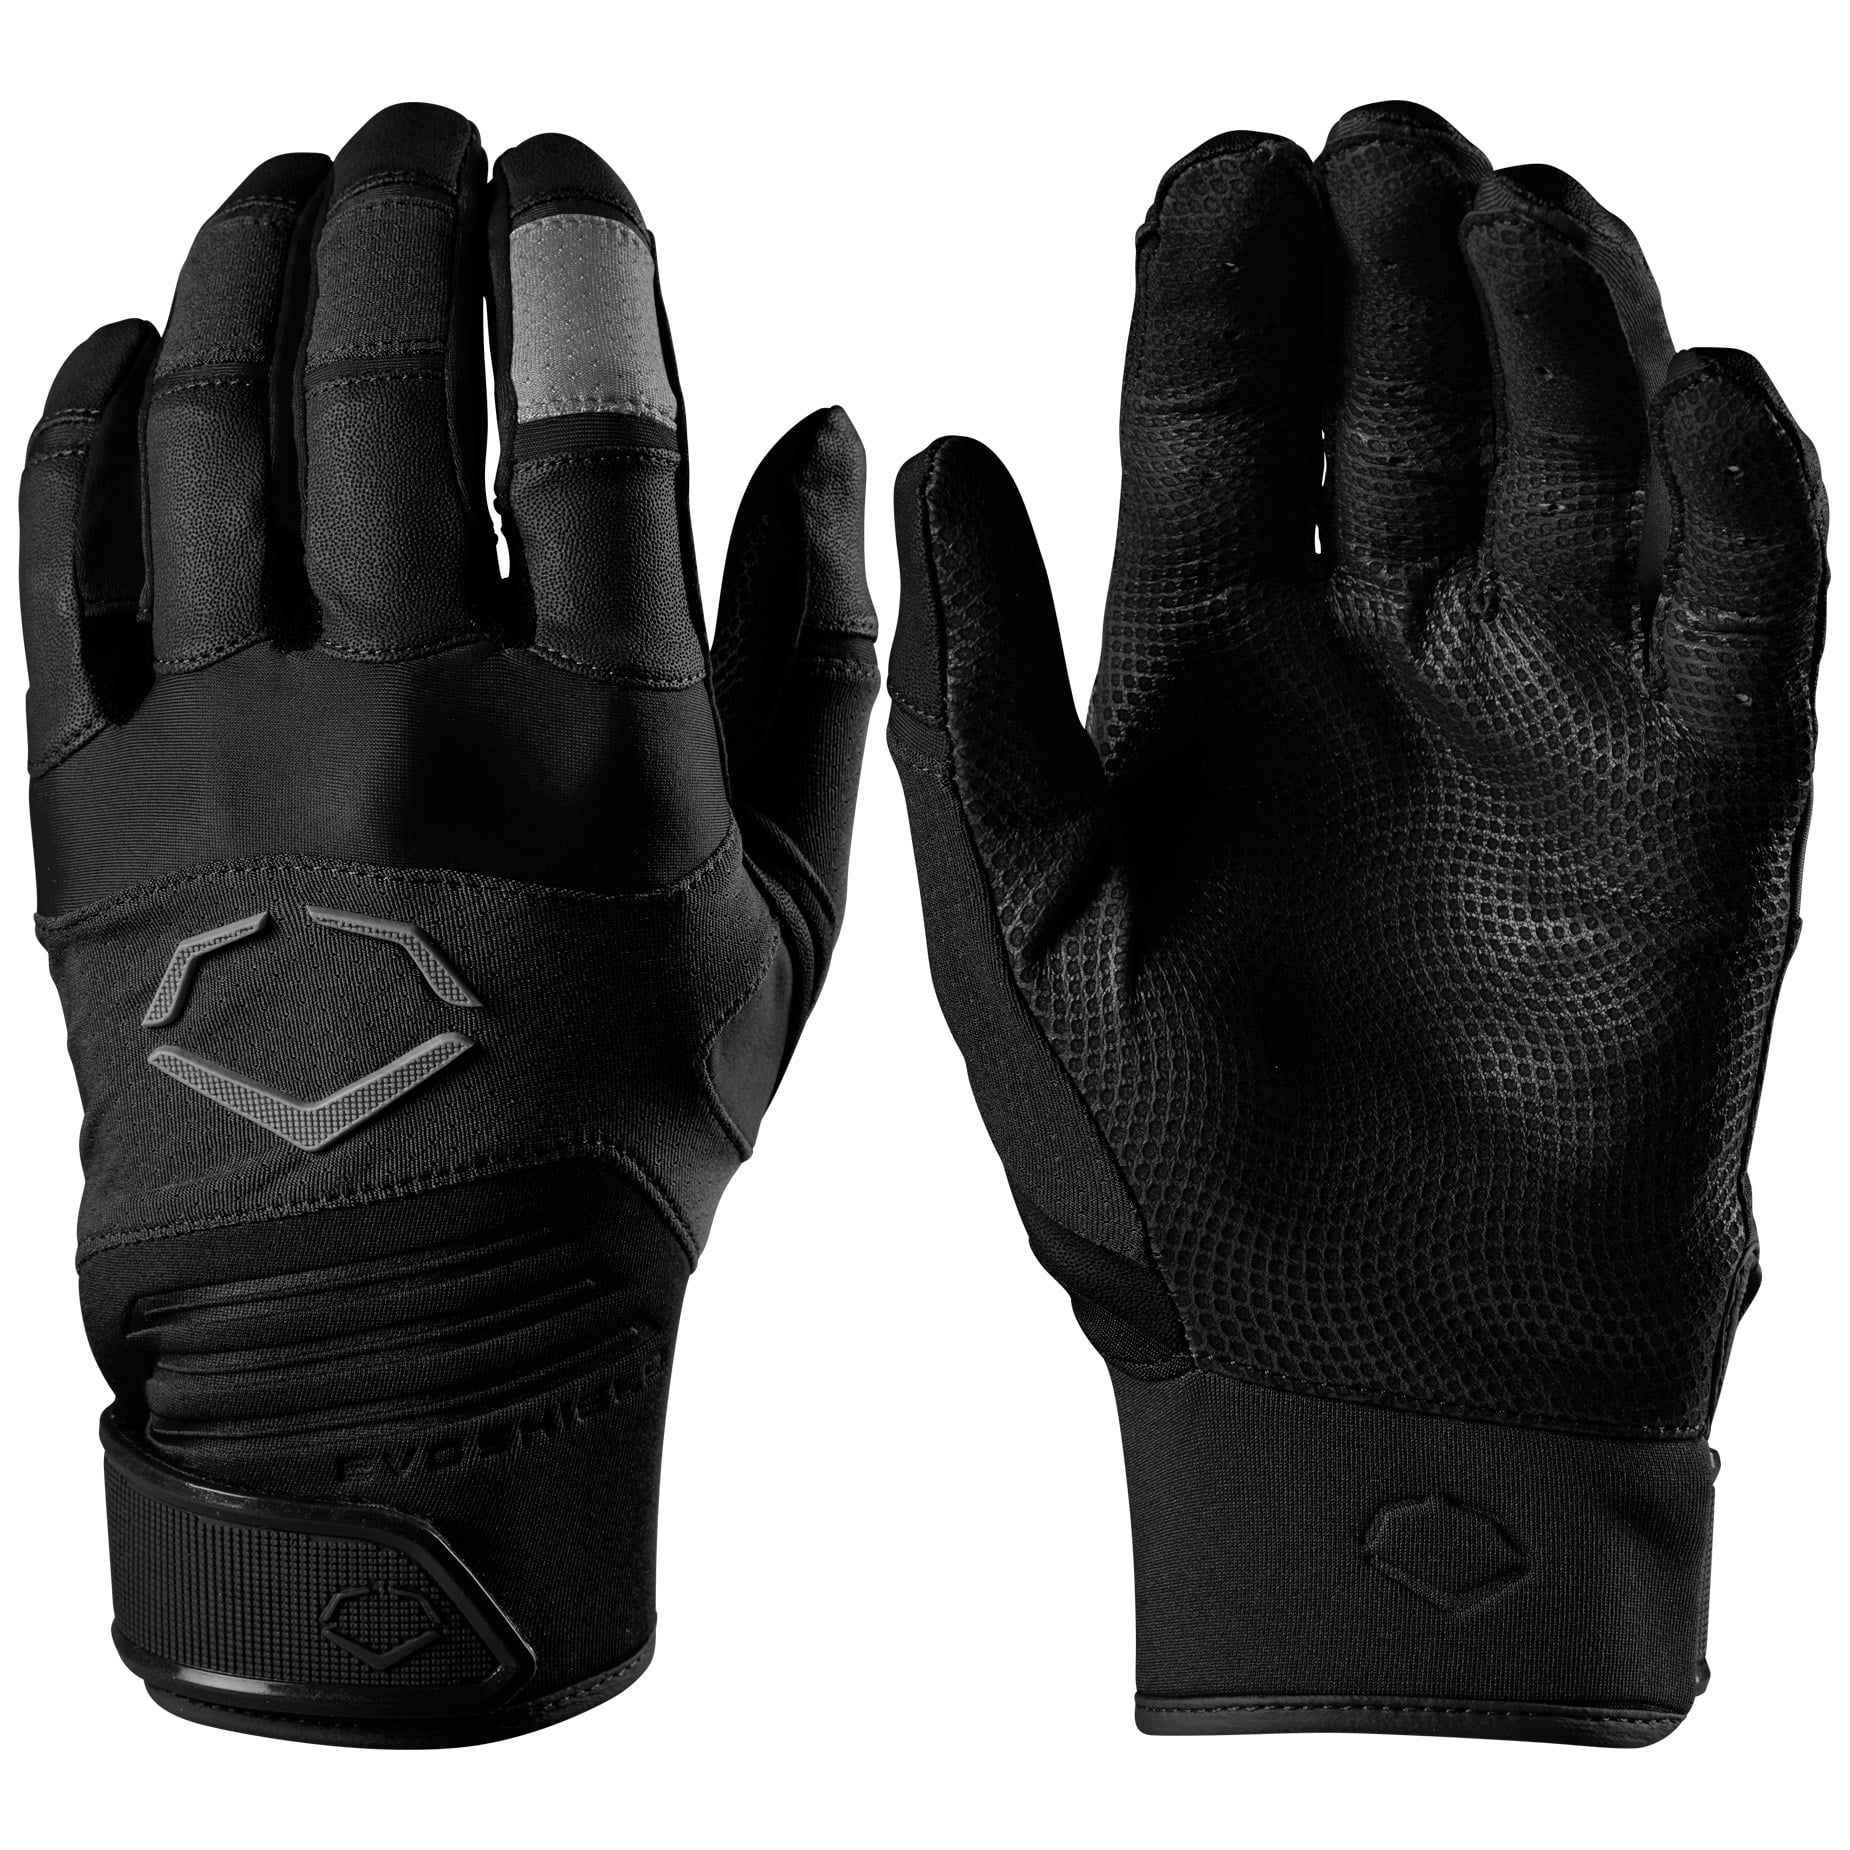 Evoshield Youth Aggressor Batting Gloves Size Large Black Sheepskin Leather